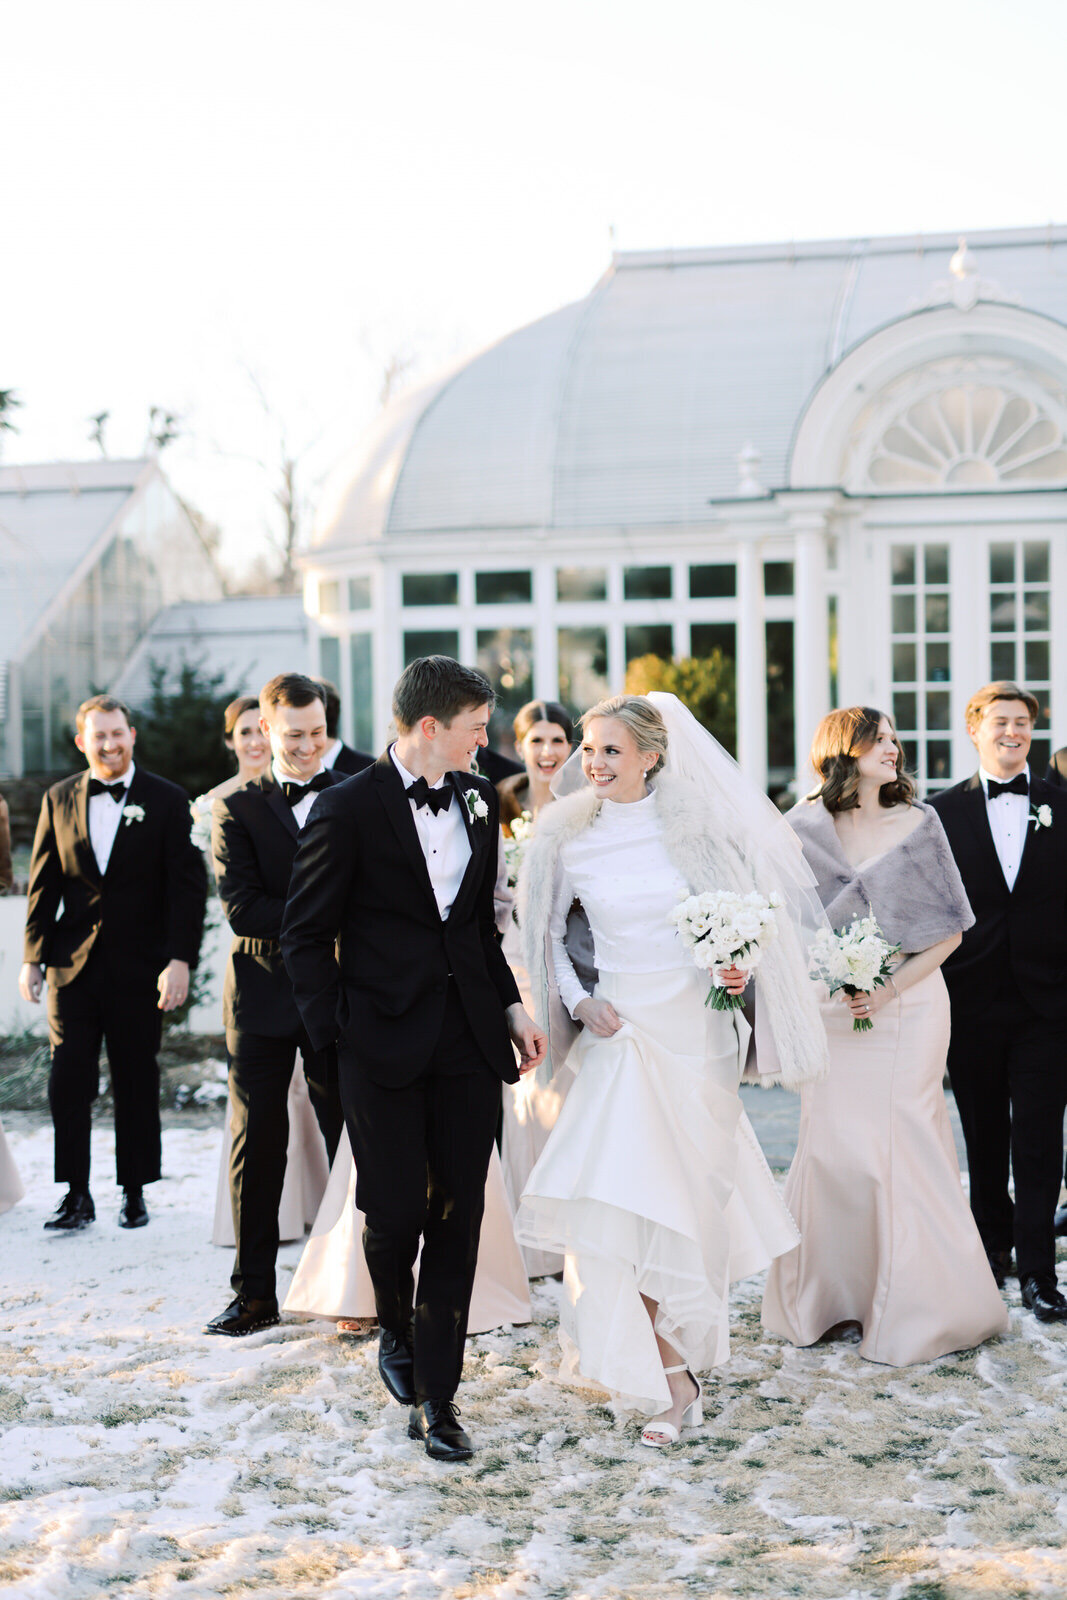 A Stylish and Fashion Inspired Winter Wedding 28